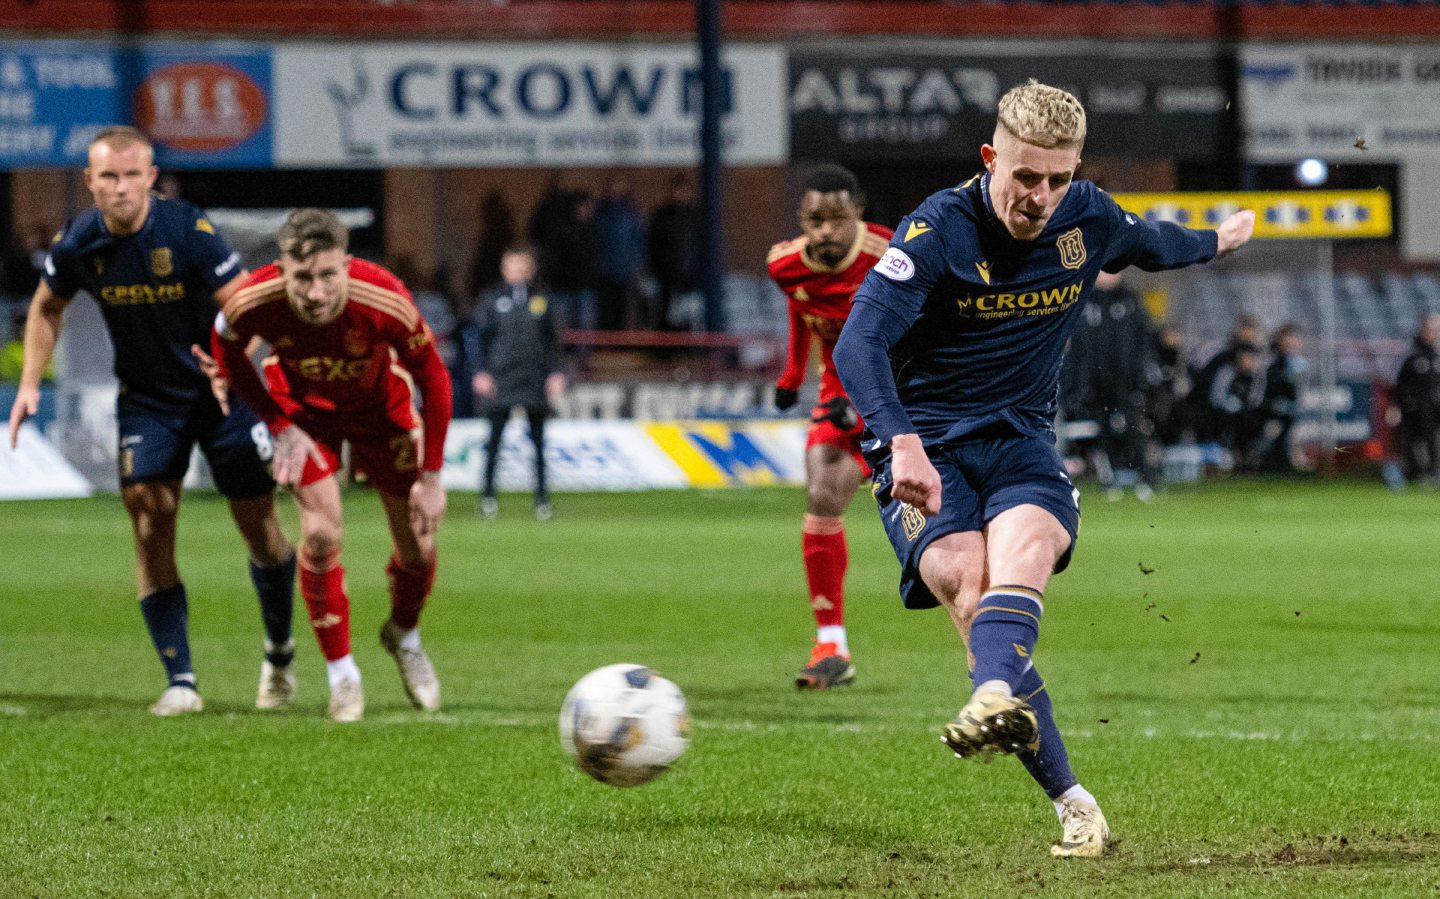 Dundee's Luke McCowan scores a penalty to make it 1-0 against Aberdeen. Image: SNS.